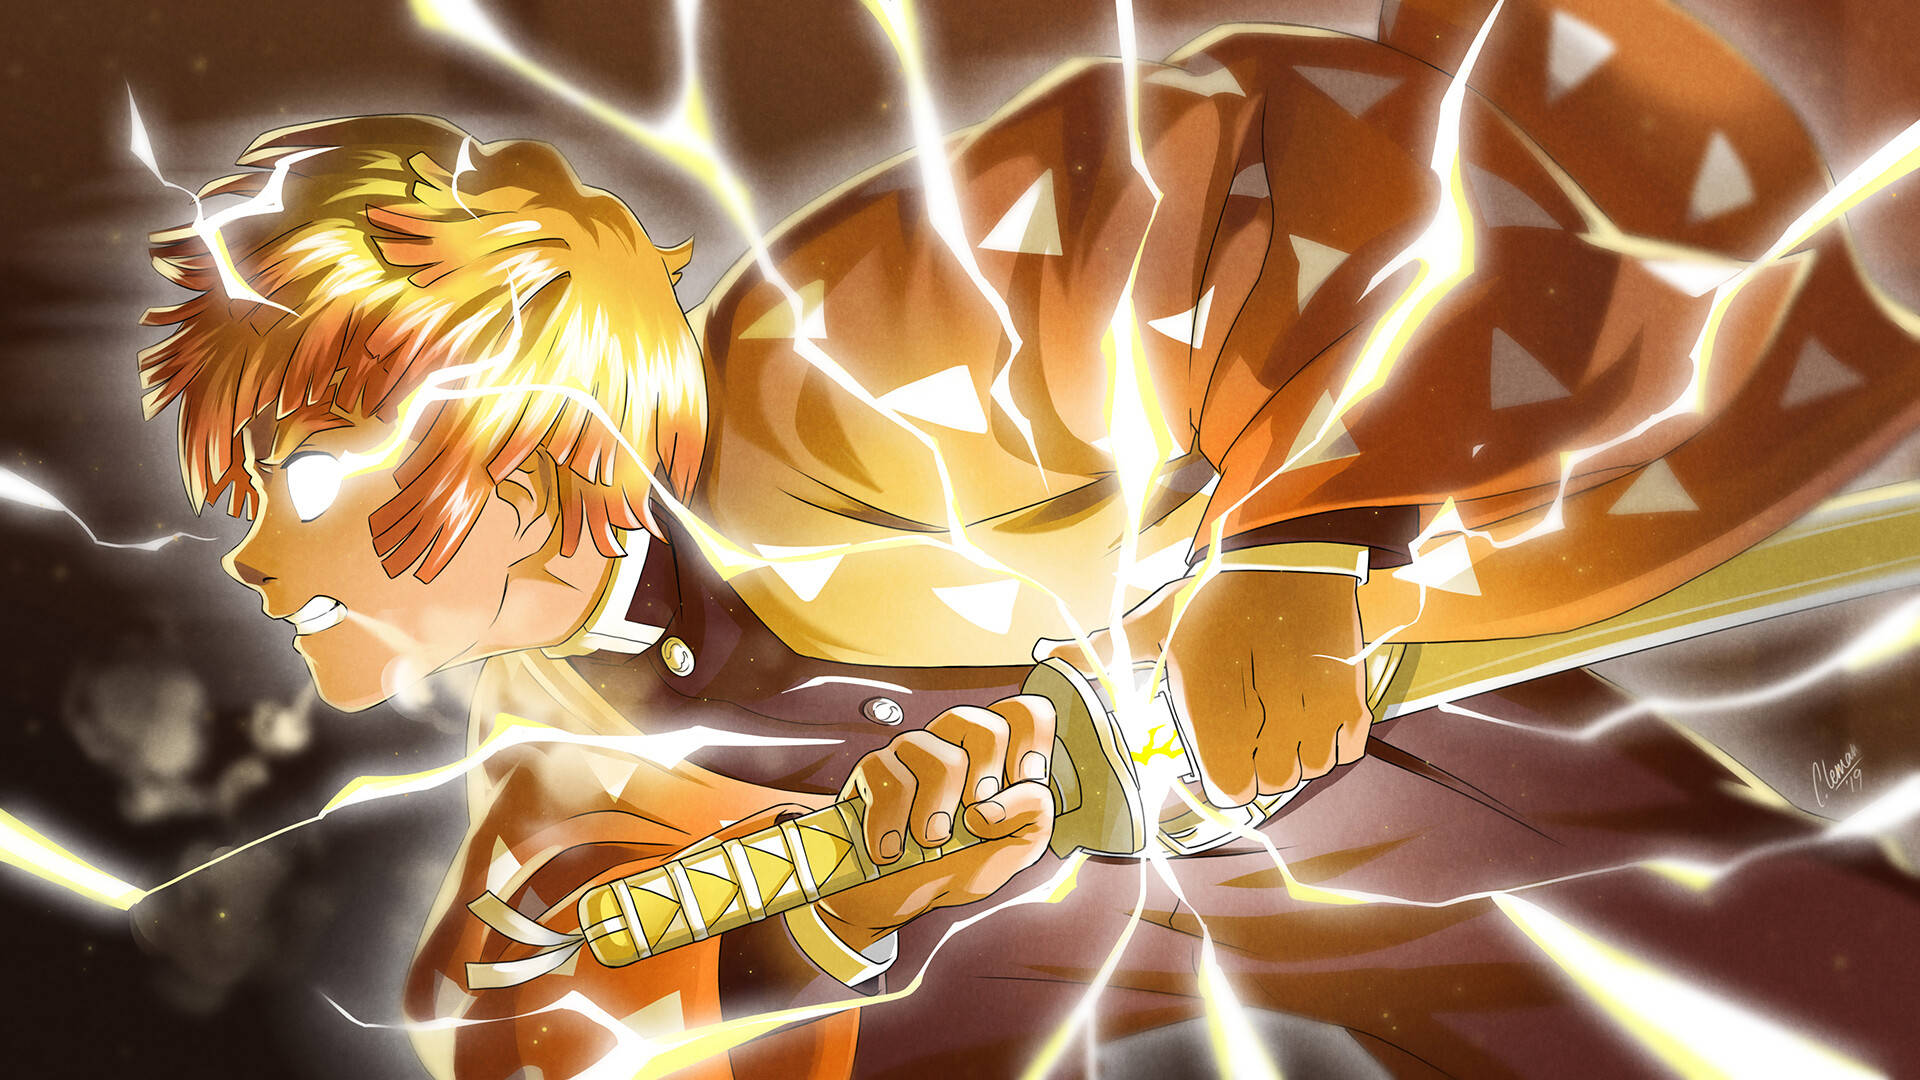 Zenitsu Unsheathing Glowing Sword Background